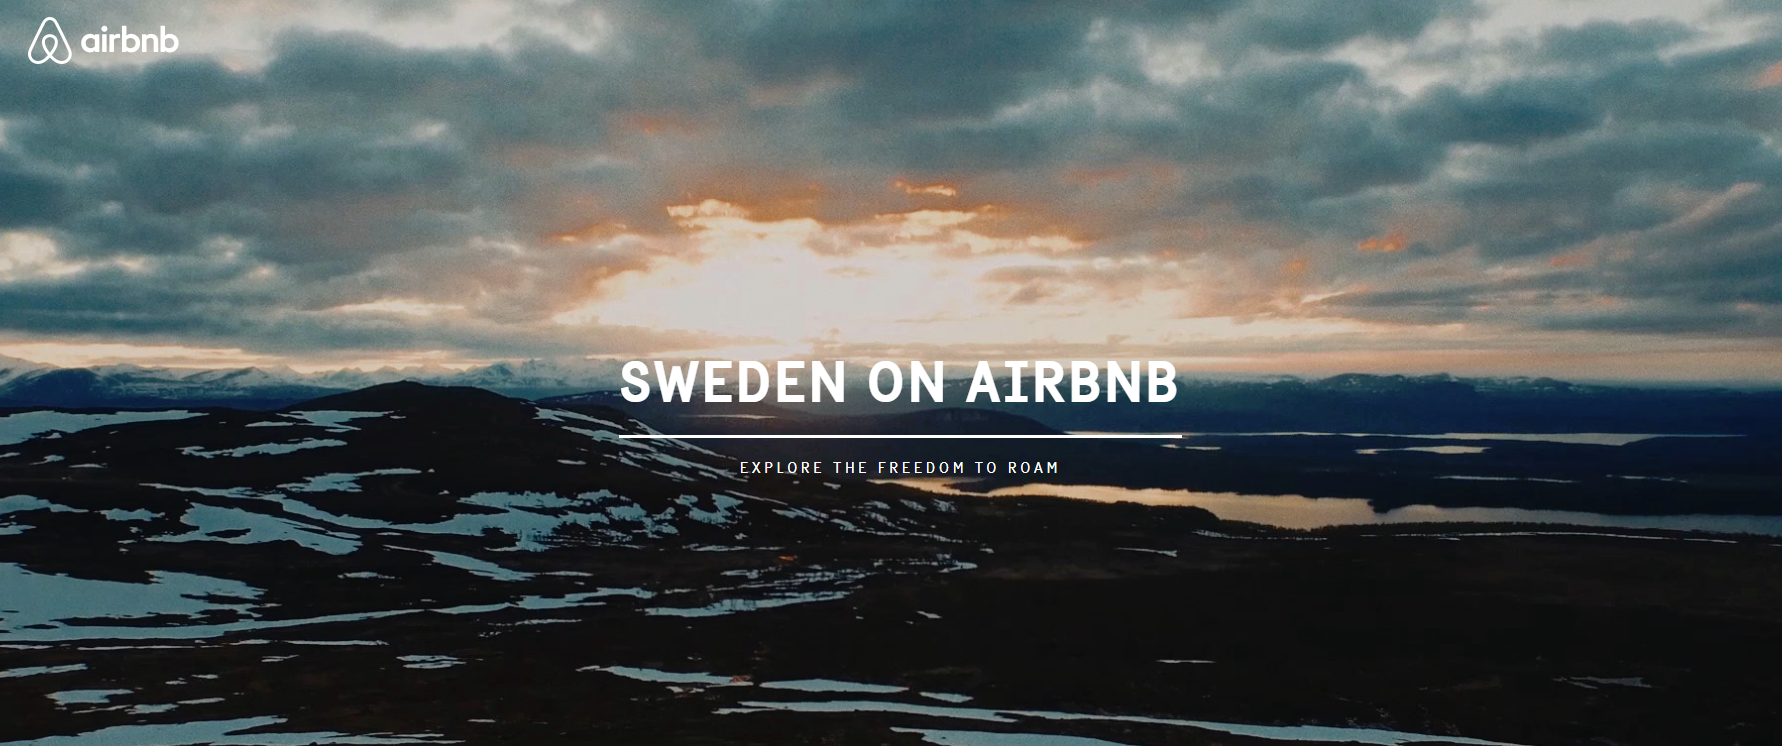 Airbnb sweden content marketing